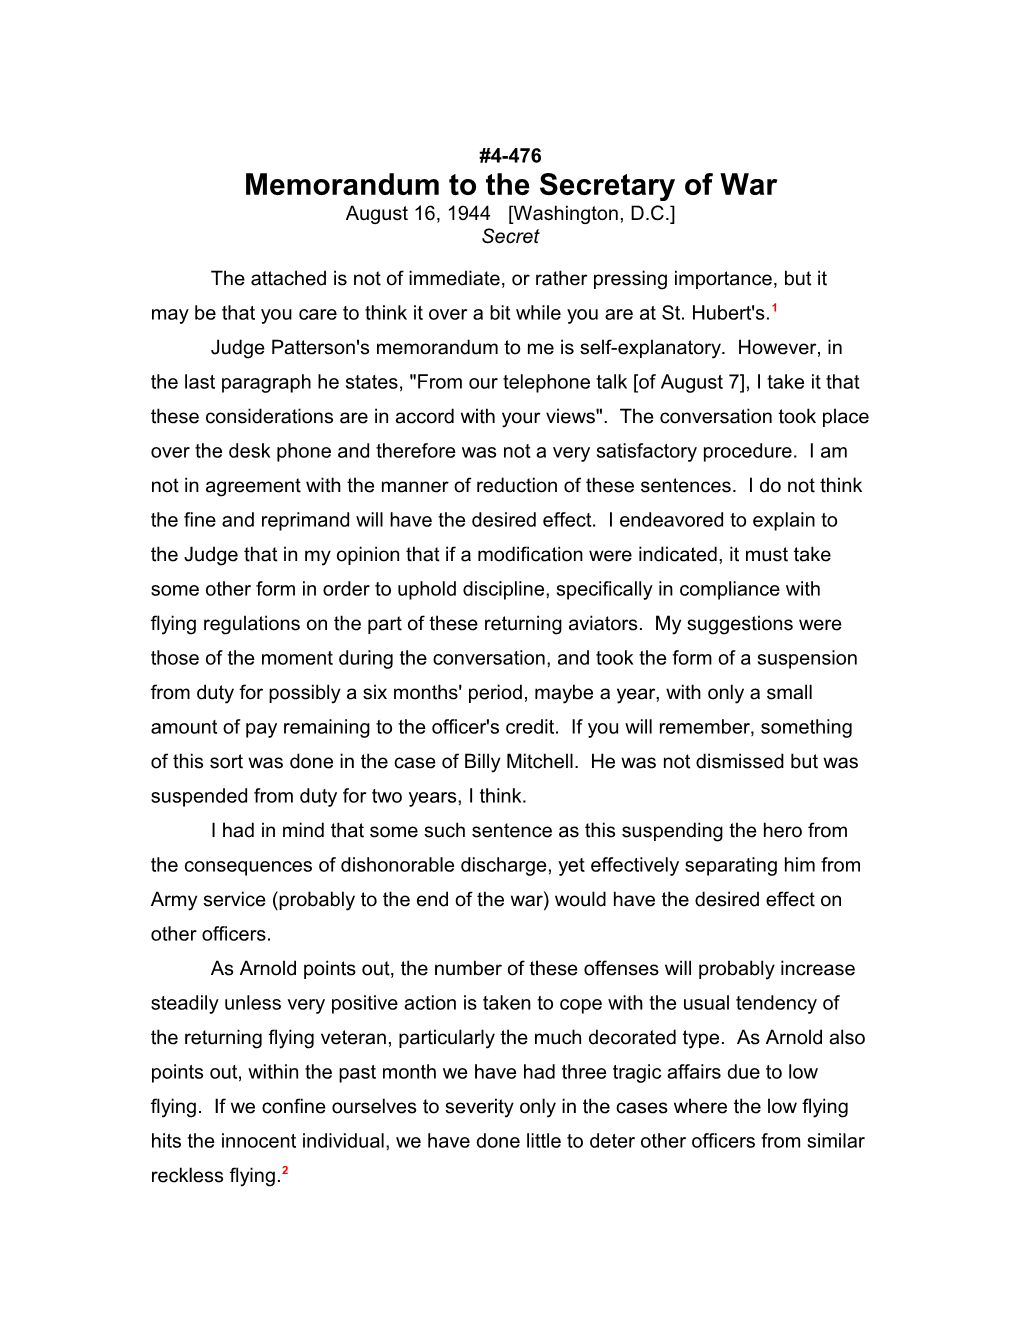 Memorandum to the Secretary of War